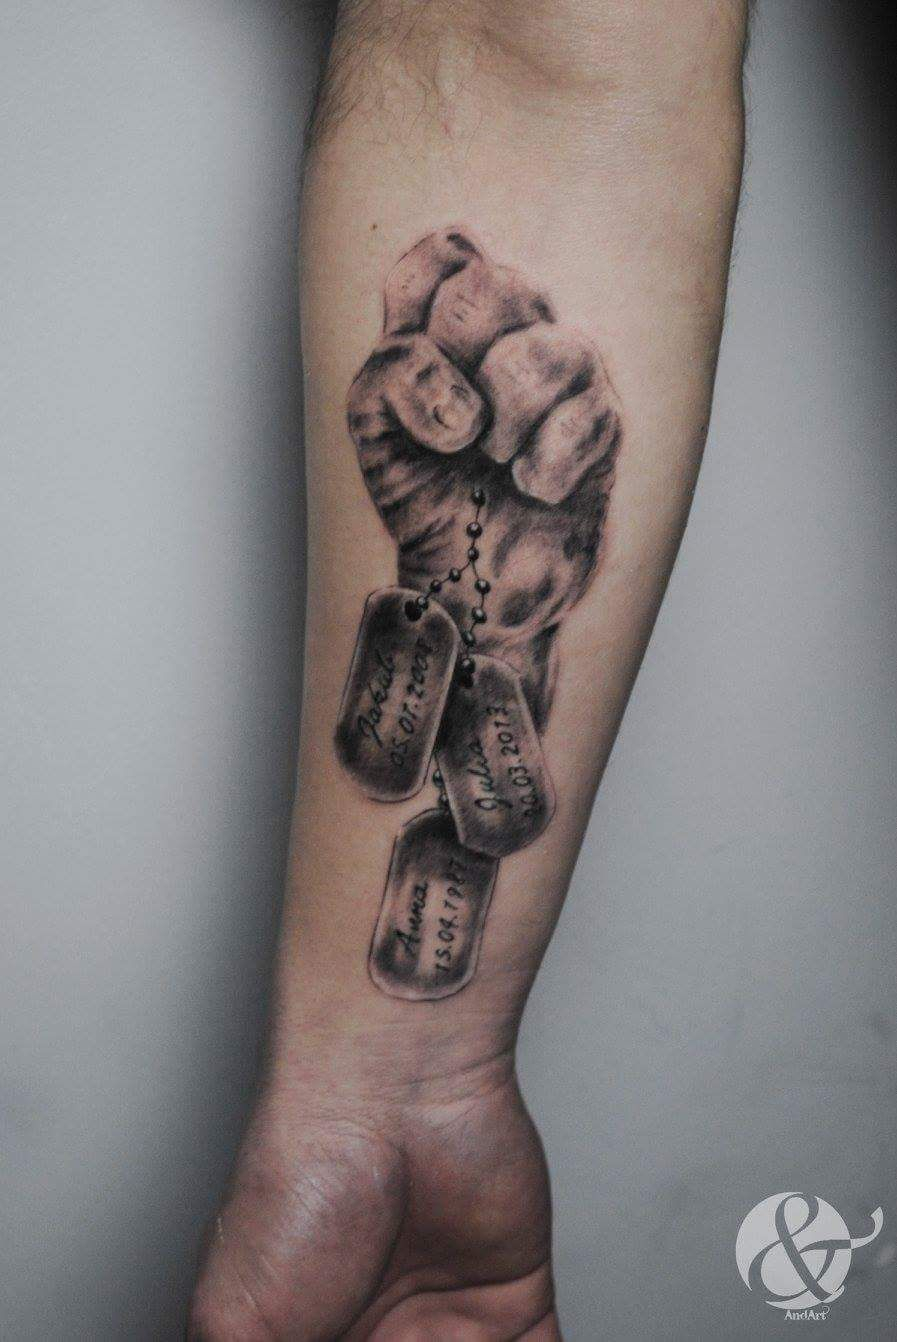 61 Fun Forearm Tattoo Ideas To Flaunt On Your Arm Tattoos throughout size 897 X 1342